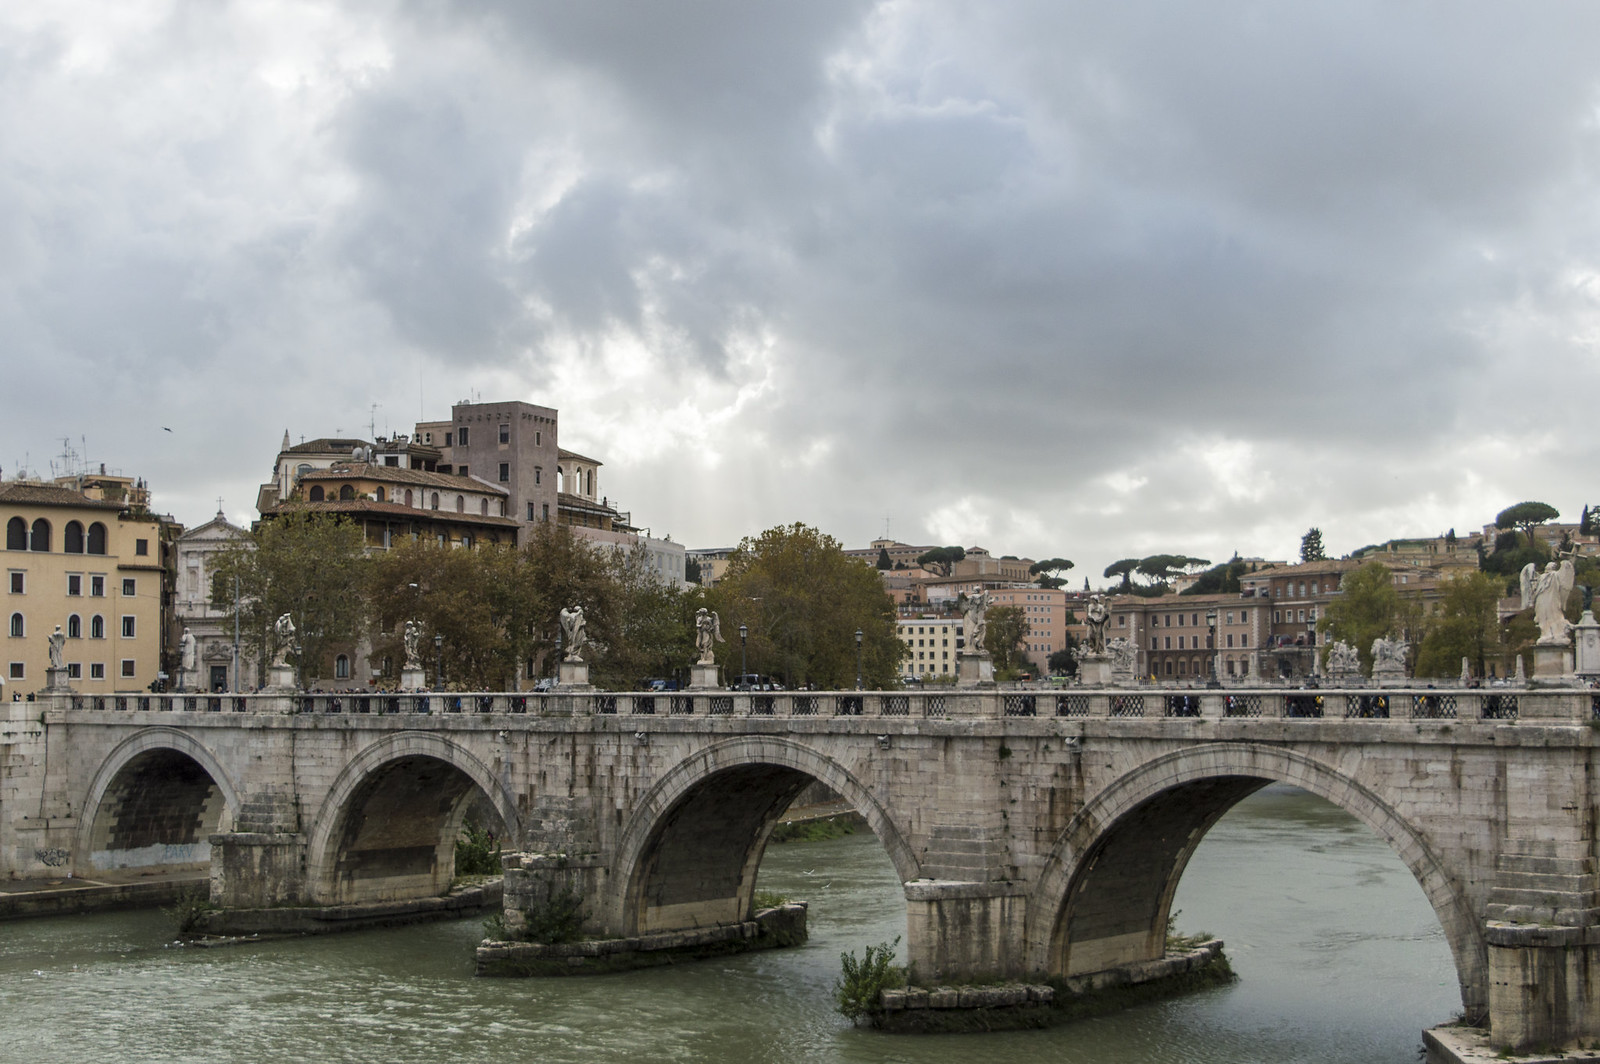 Bridge over River Tiber